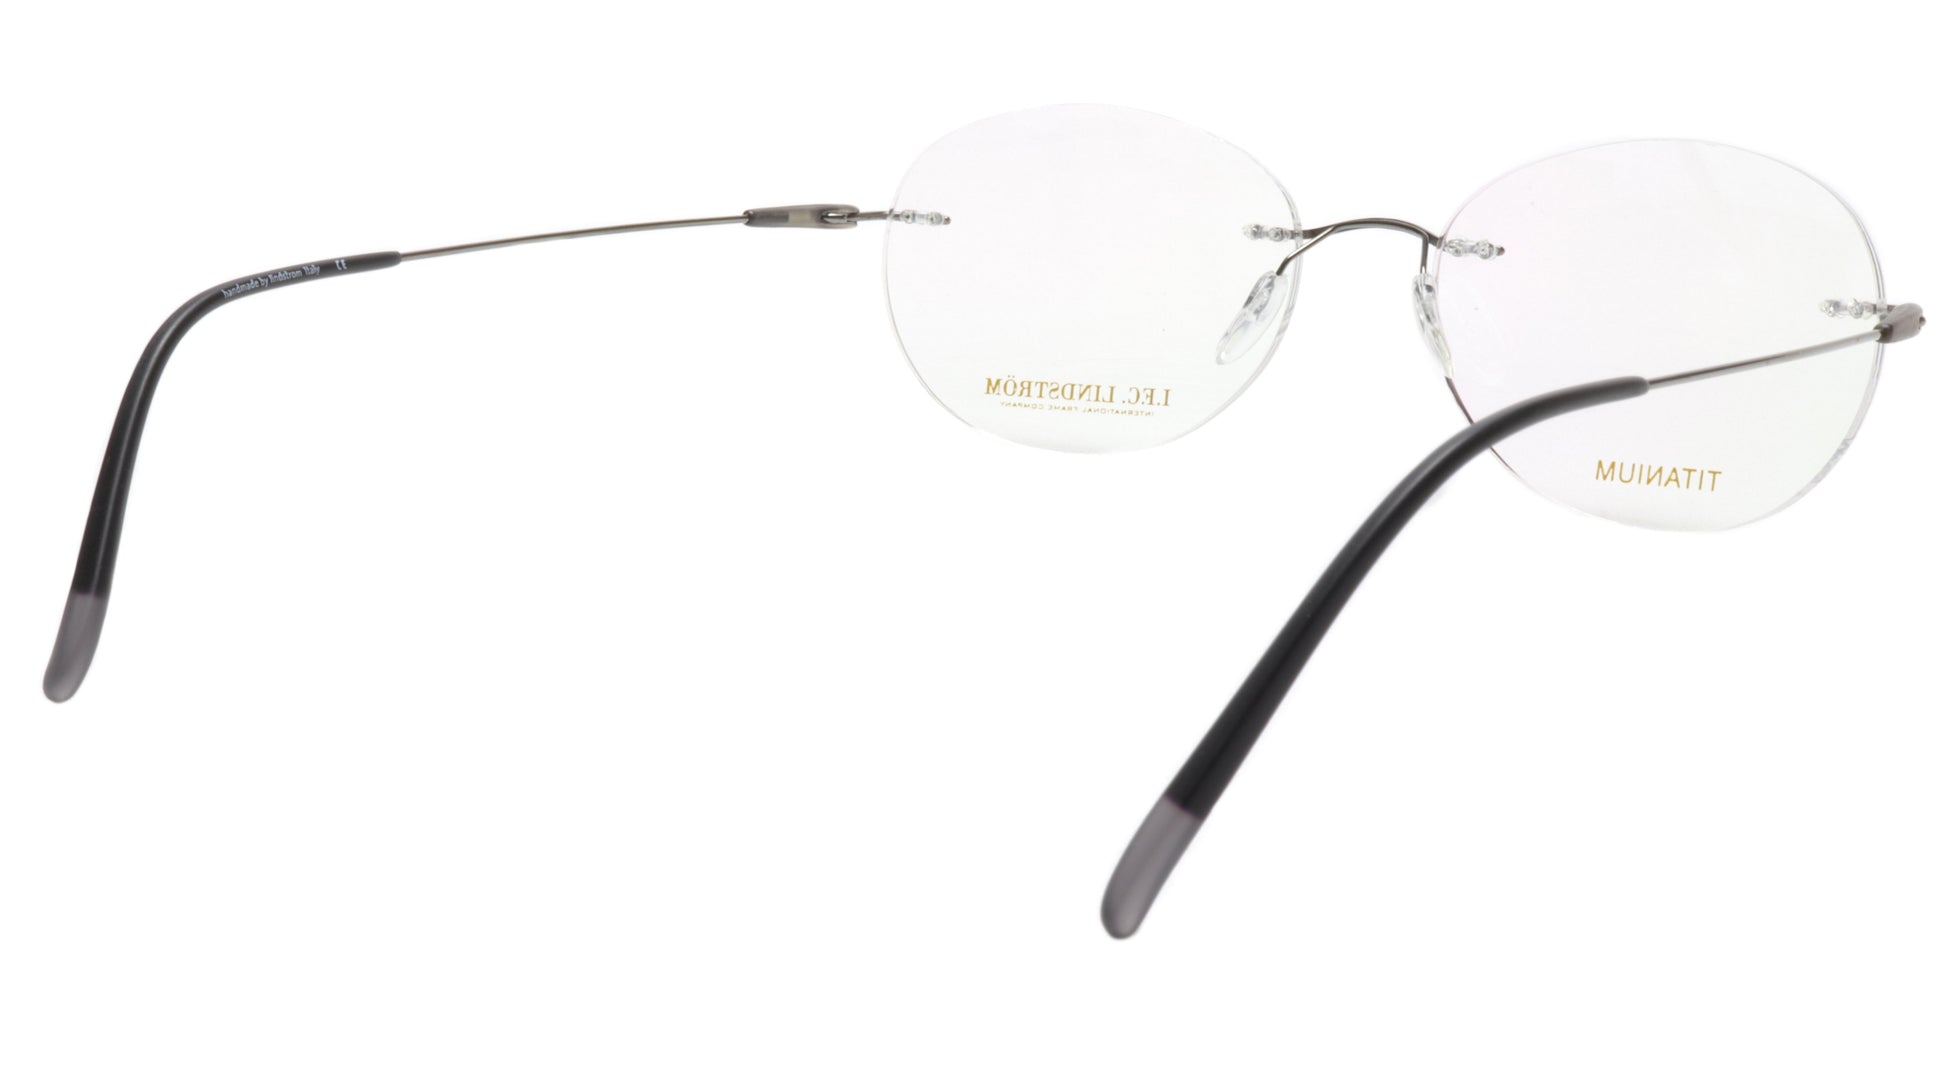 LINDSTROM L-105 C2 Eyeglasses Frame Titanium Gunmetal Black Italy Made 53-18-145 - Frame Bay